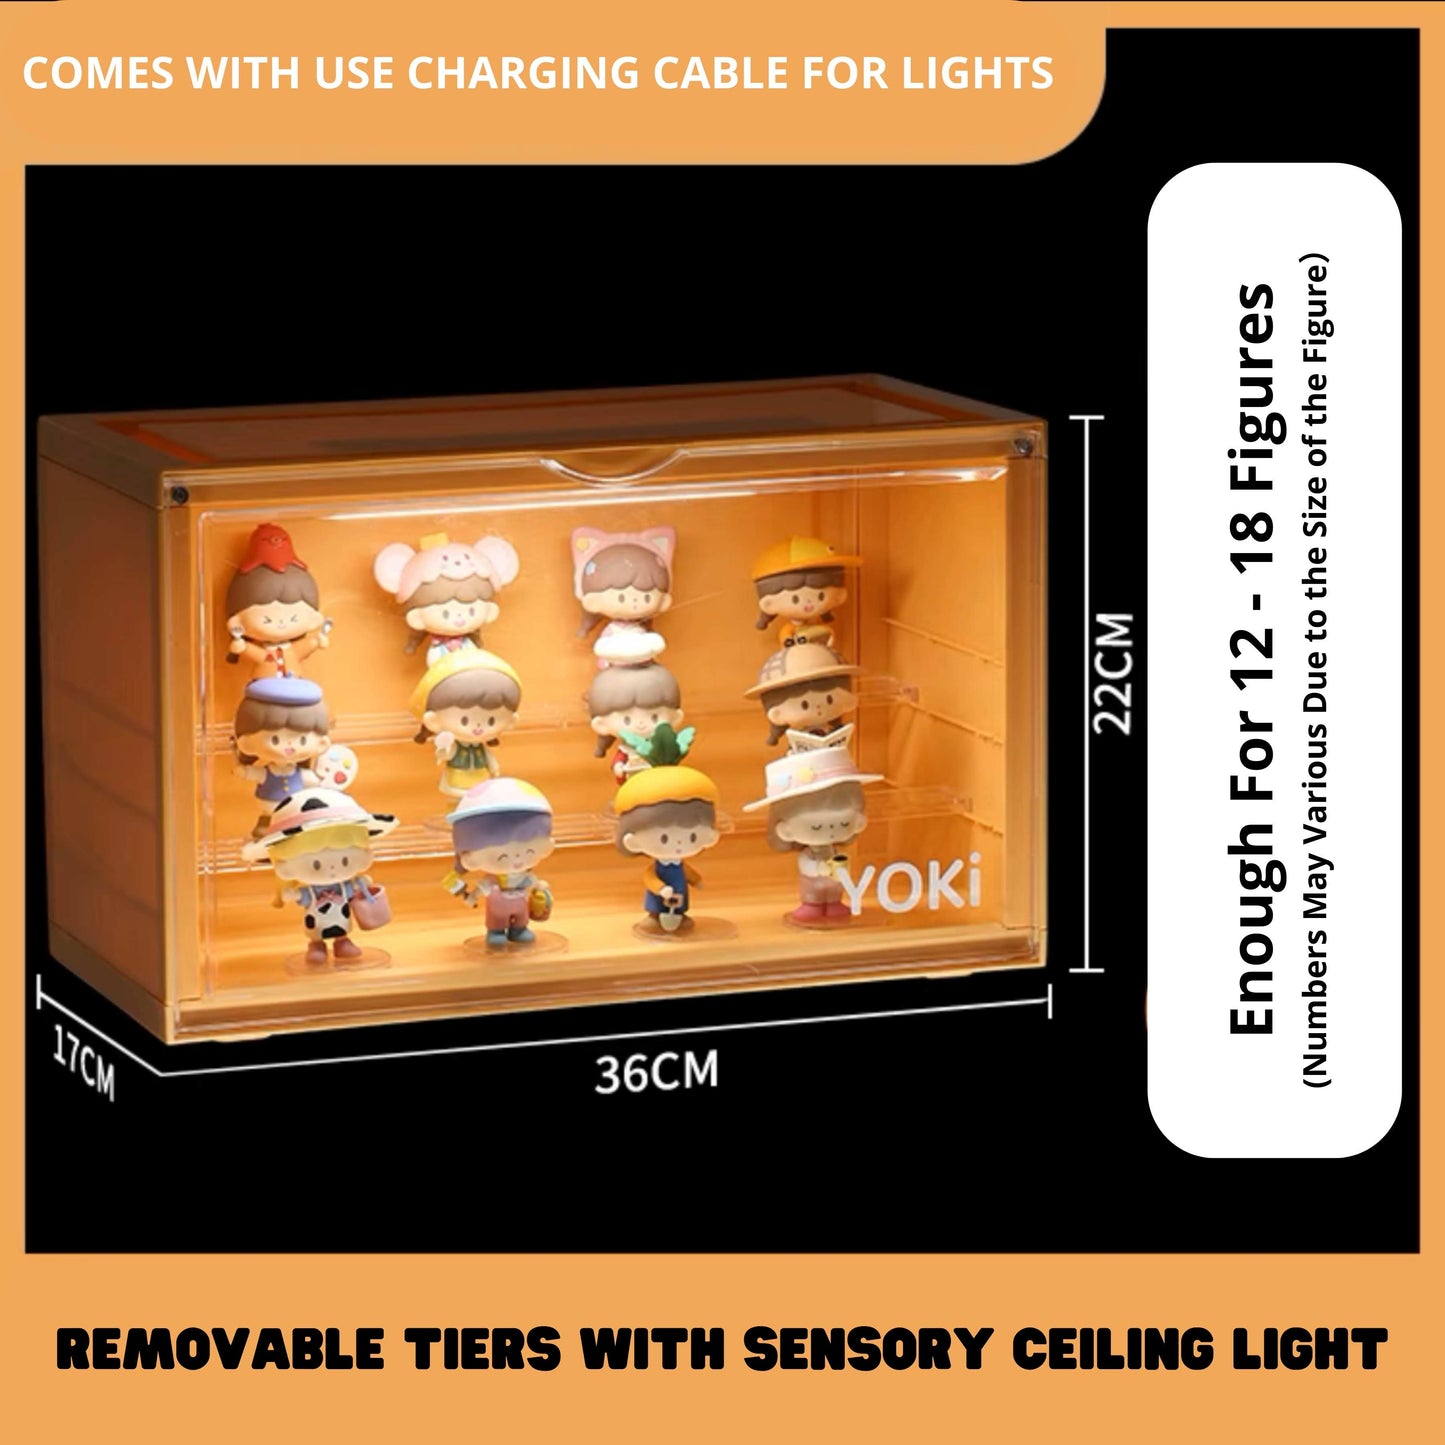 Yoki Display Box: Classic Solid Back + Portable Light Bar